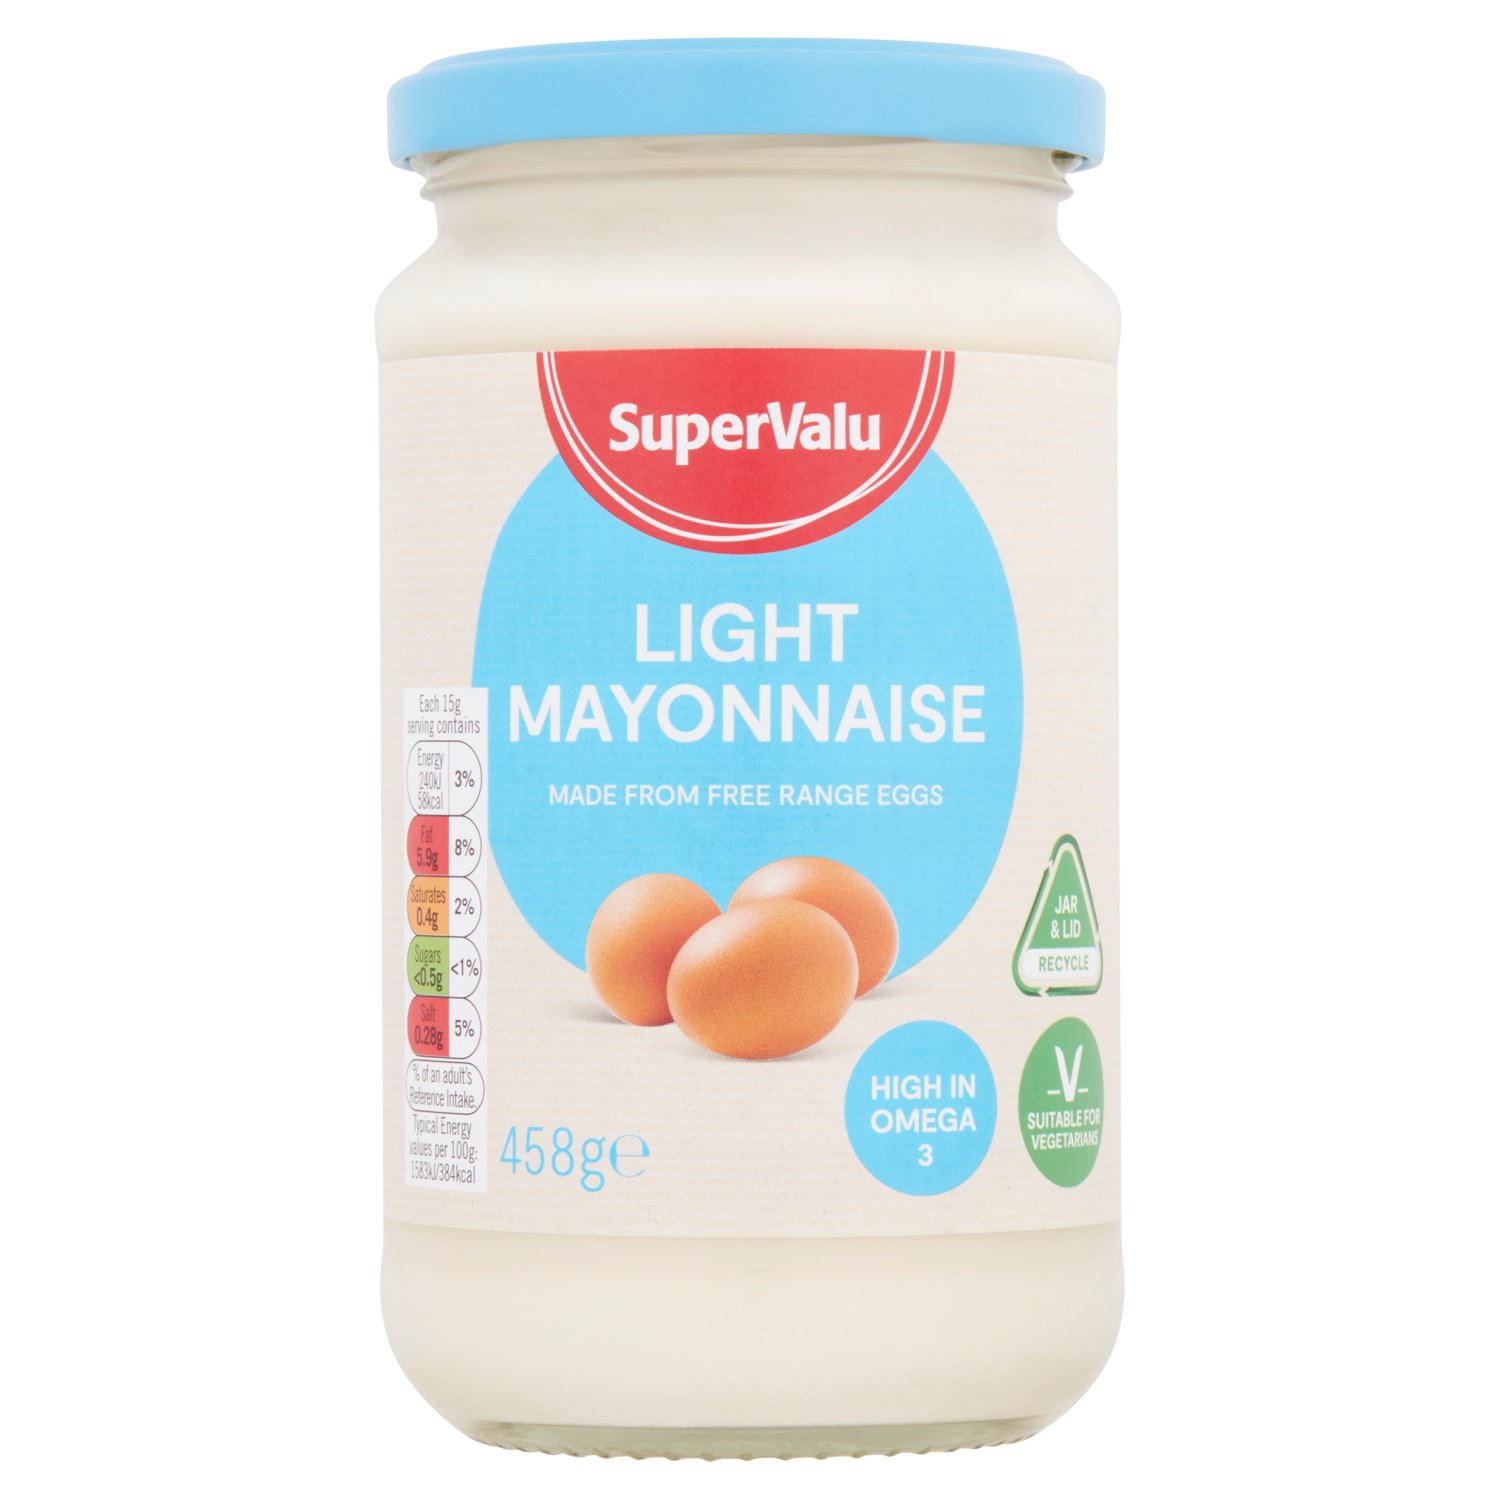 SuperValu Light Mayonnaise 458g